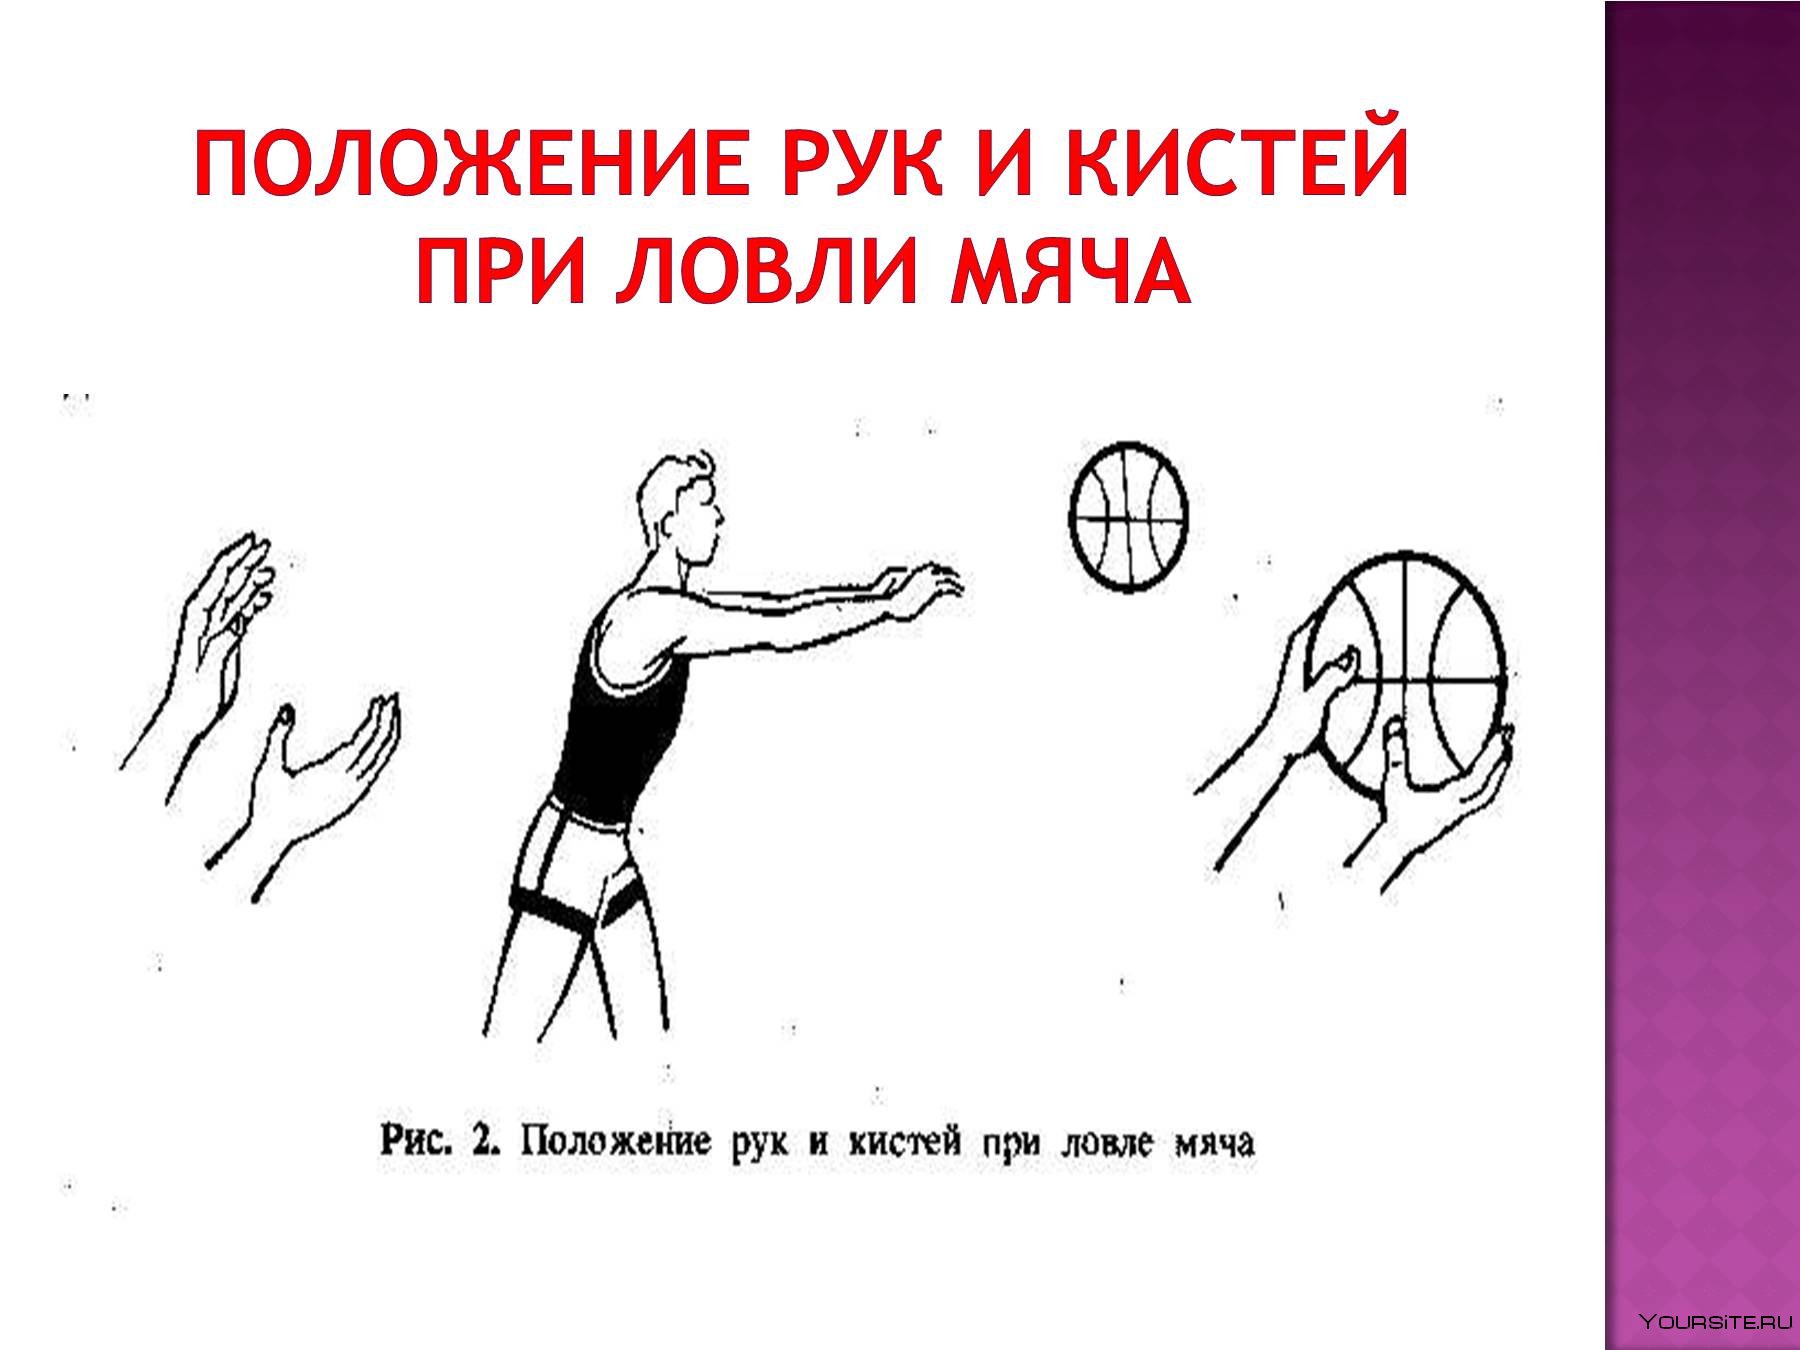 Передачи в баскетболе упражнения. Техника передачи мяча от груди.баскетбол двумя. Техника передачи баскетбольного мяча двумя руками. Ловля и передача мяча в движении в баскетболе. Техника ловли мяча в баскетболе.